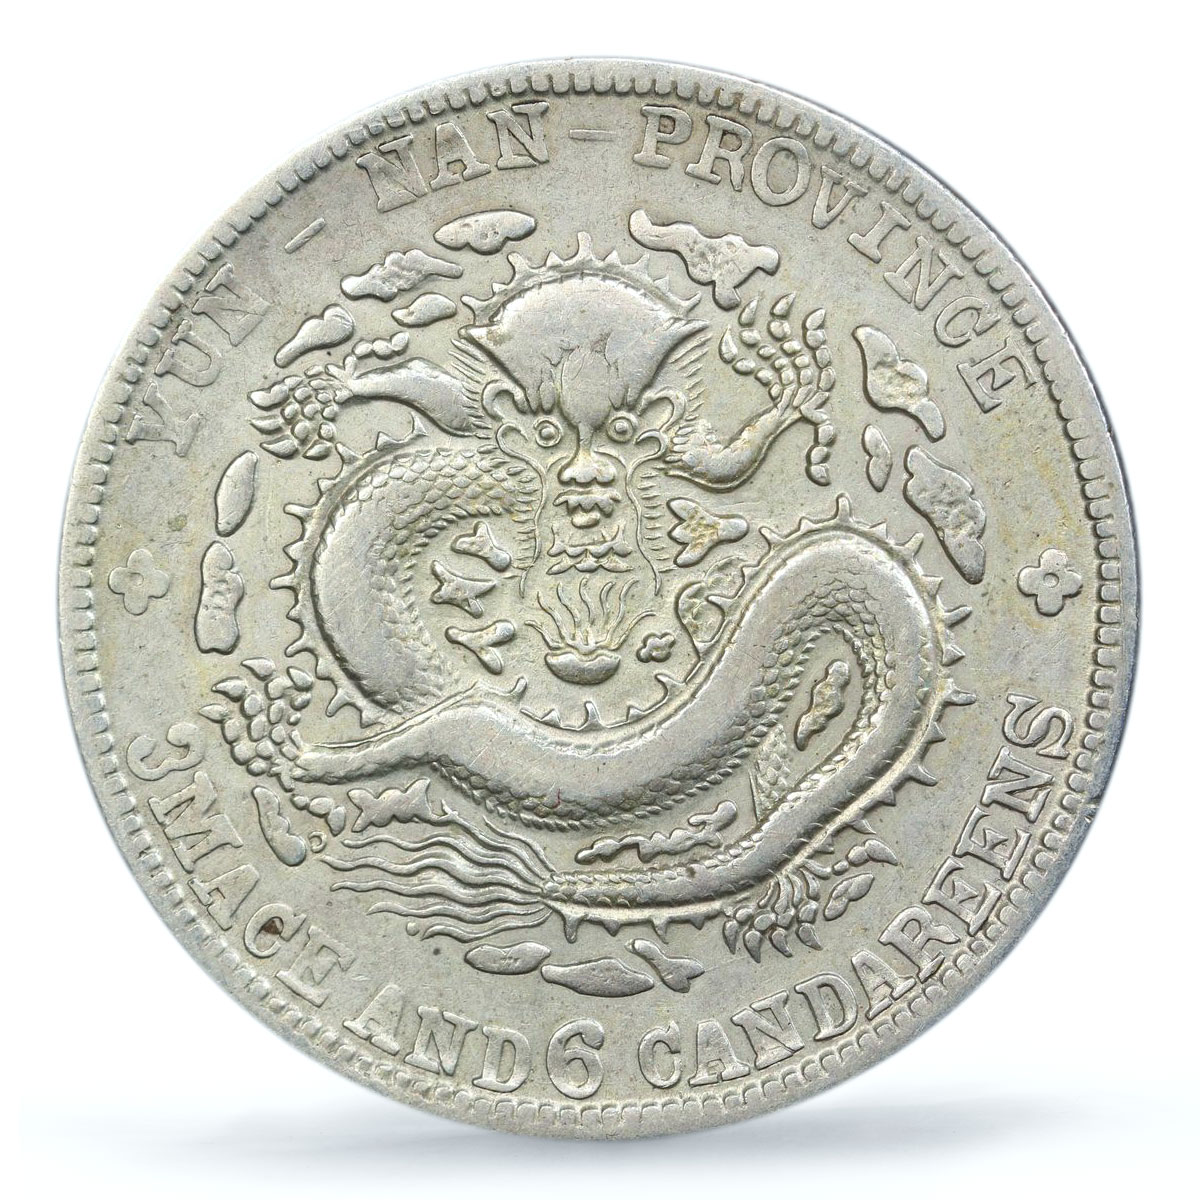 China Yunnan 50 cents Guangxu Dragon Y-253 VF PCGS silver coin ND 1908